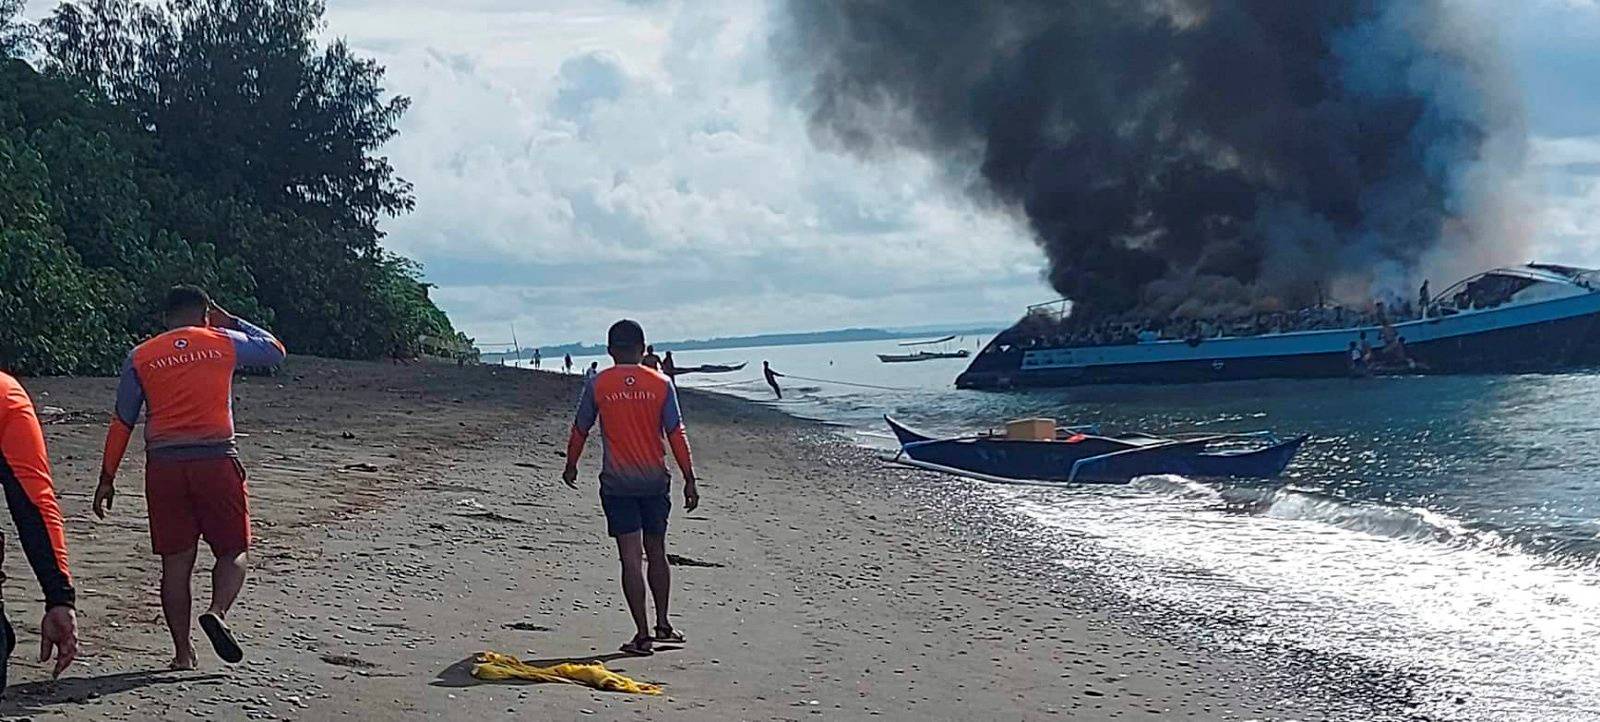 Smoke rises from a burning passenger vessel near Real